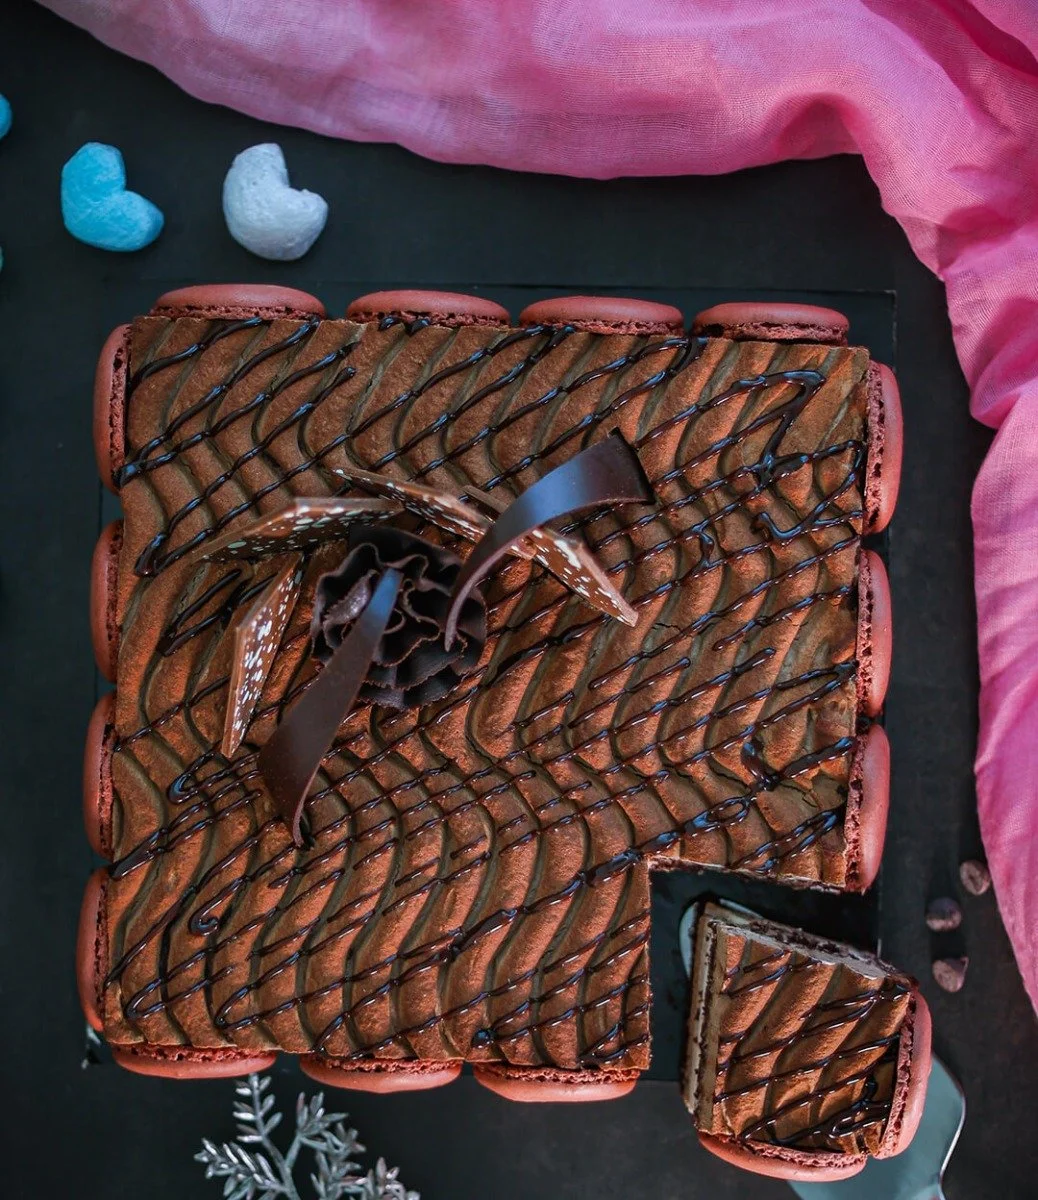 Triple chocolate  by Celebrating Life Bakery